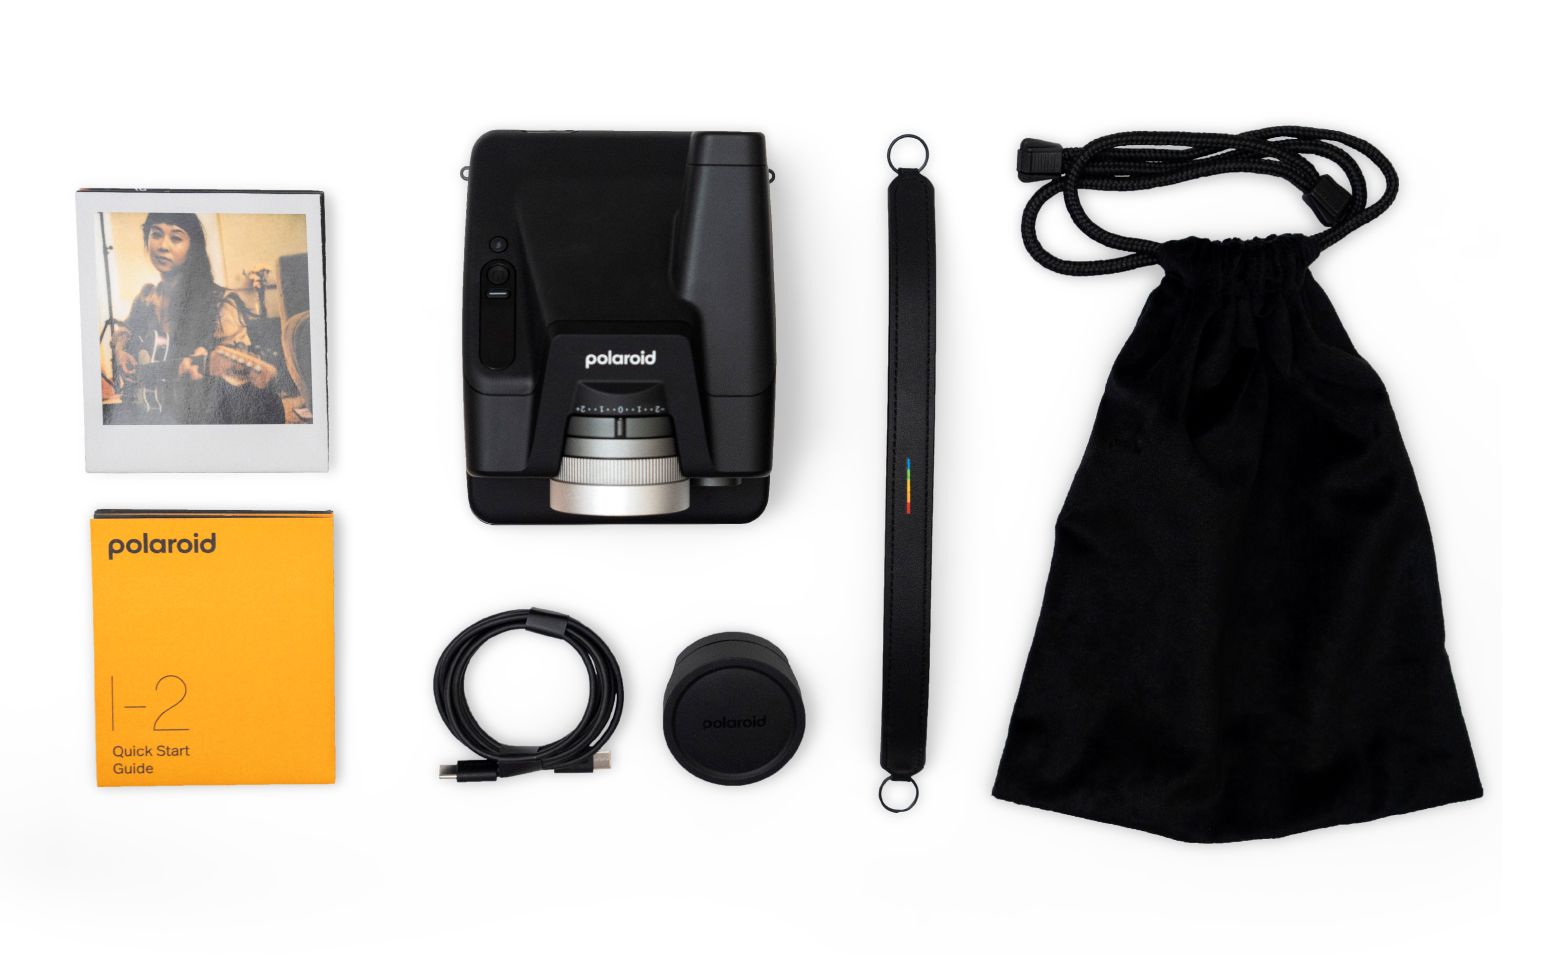 Polaroid I-2 Instant Camera (Black) 9078 B&H Photo Video